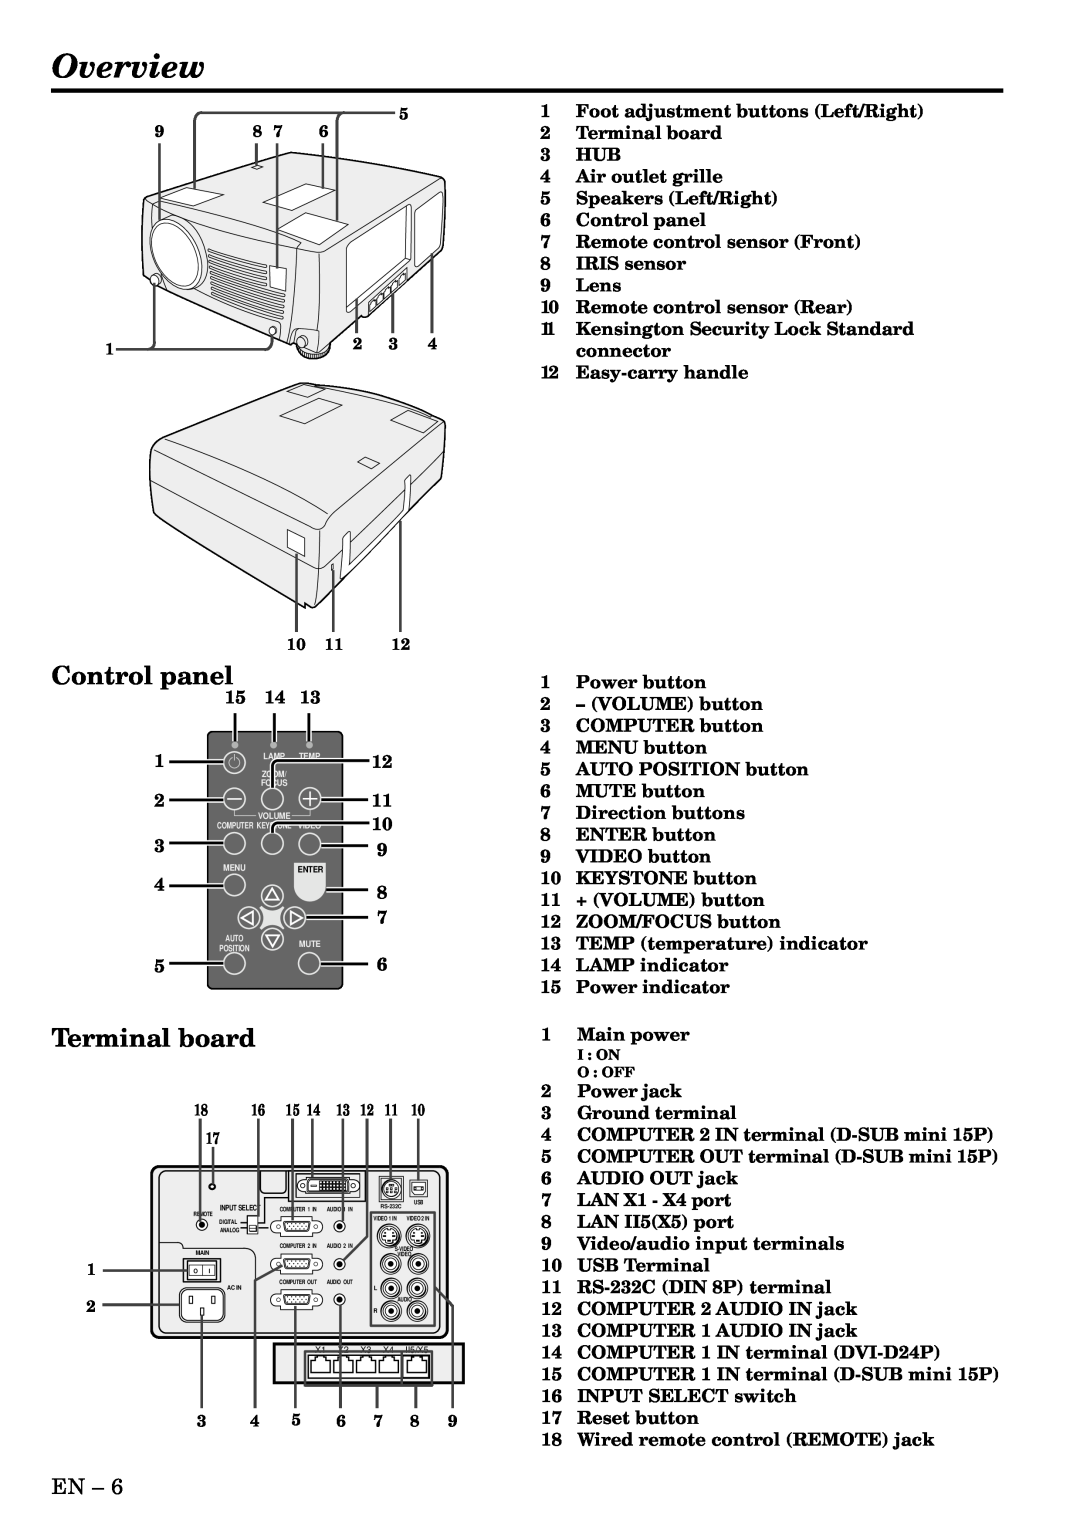 Mitsubishi Electronics X500U user manual Overview, Control panel, Terminal board, 15 14, Remote control sensor Rear 